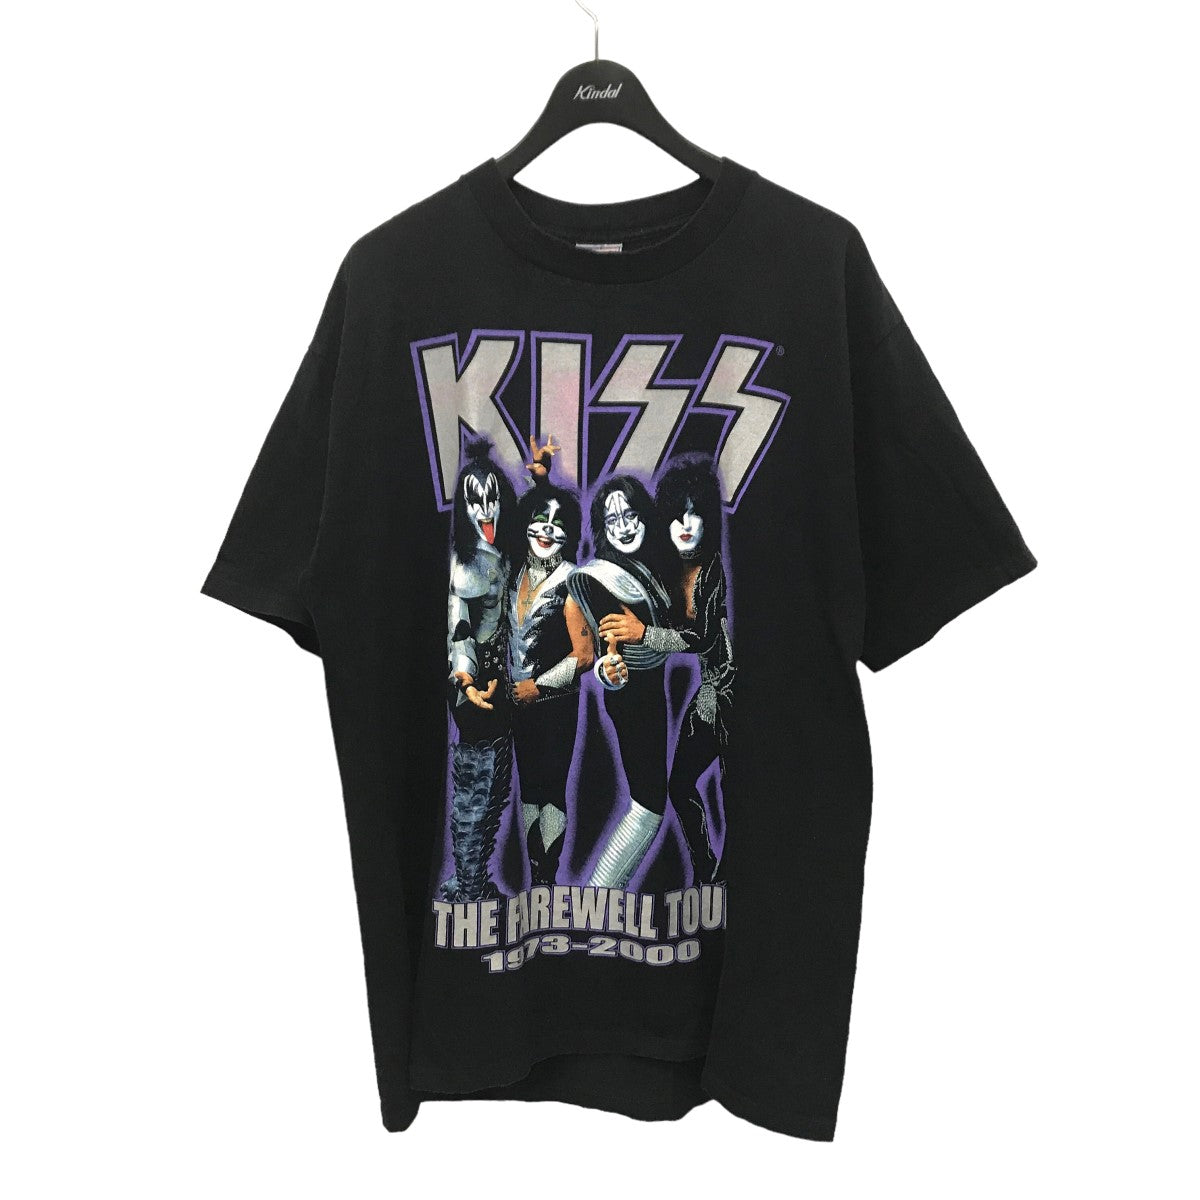 KISS the farewell tour 1973-2000 バンドTシャツ肩幅約49cm